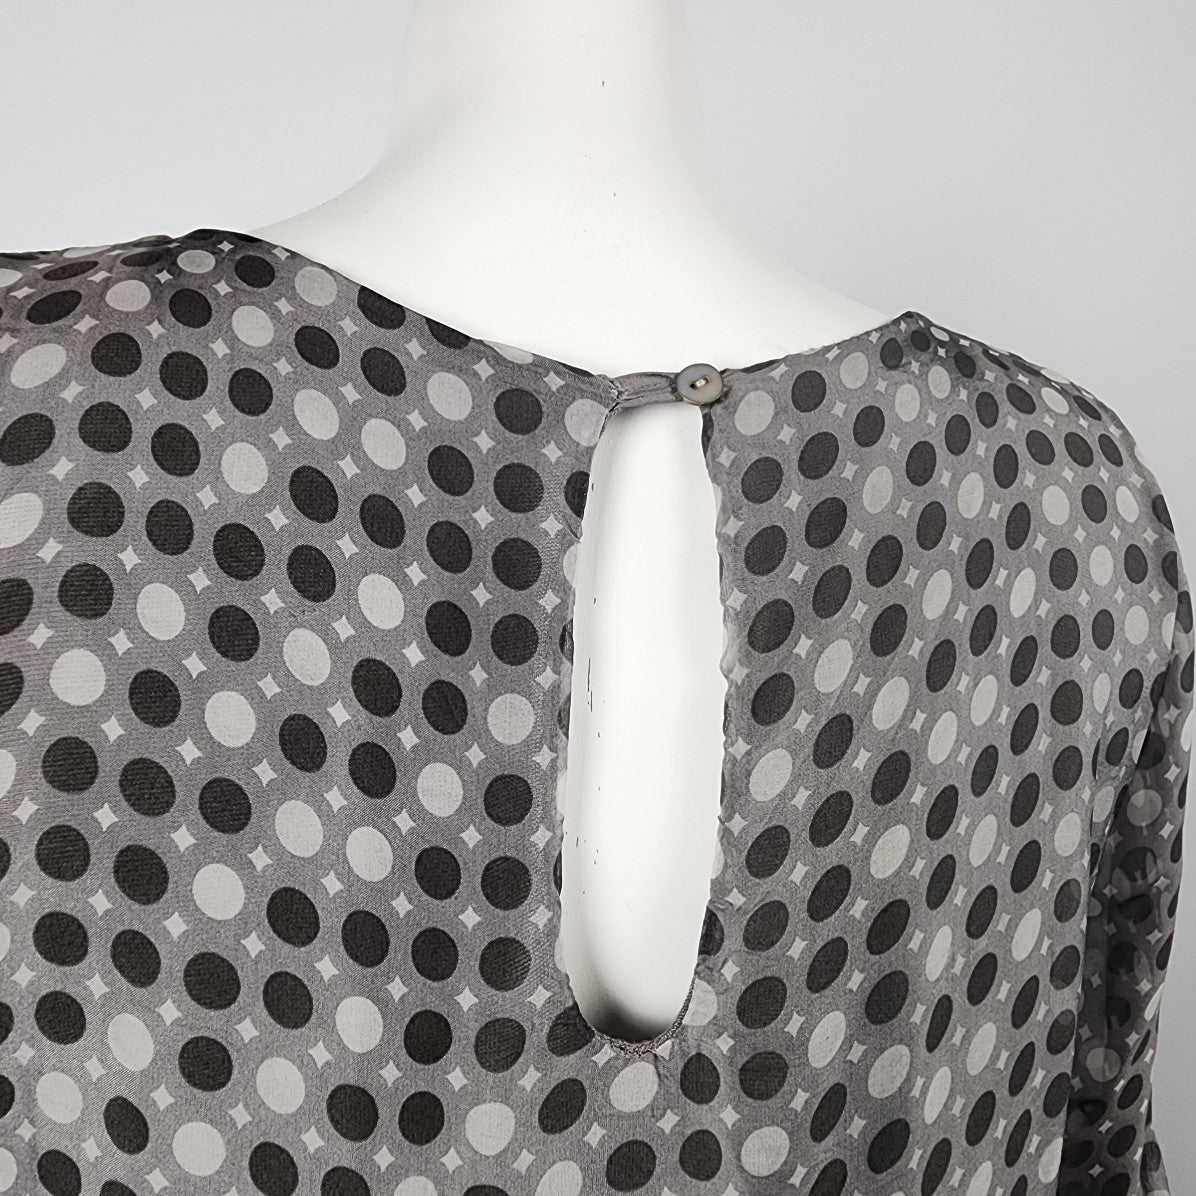 Angela Mara Grey Silk Empire Waist Long Sleeve Top Size S/M